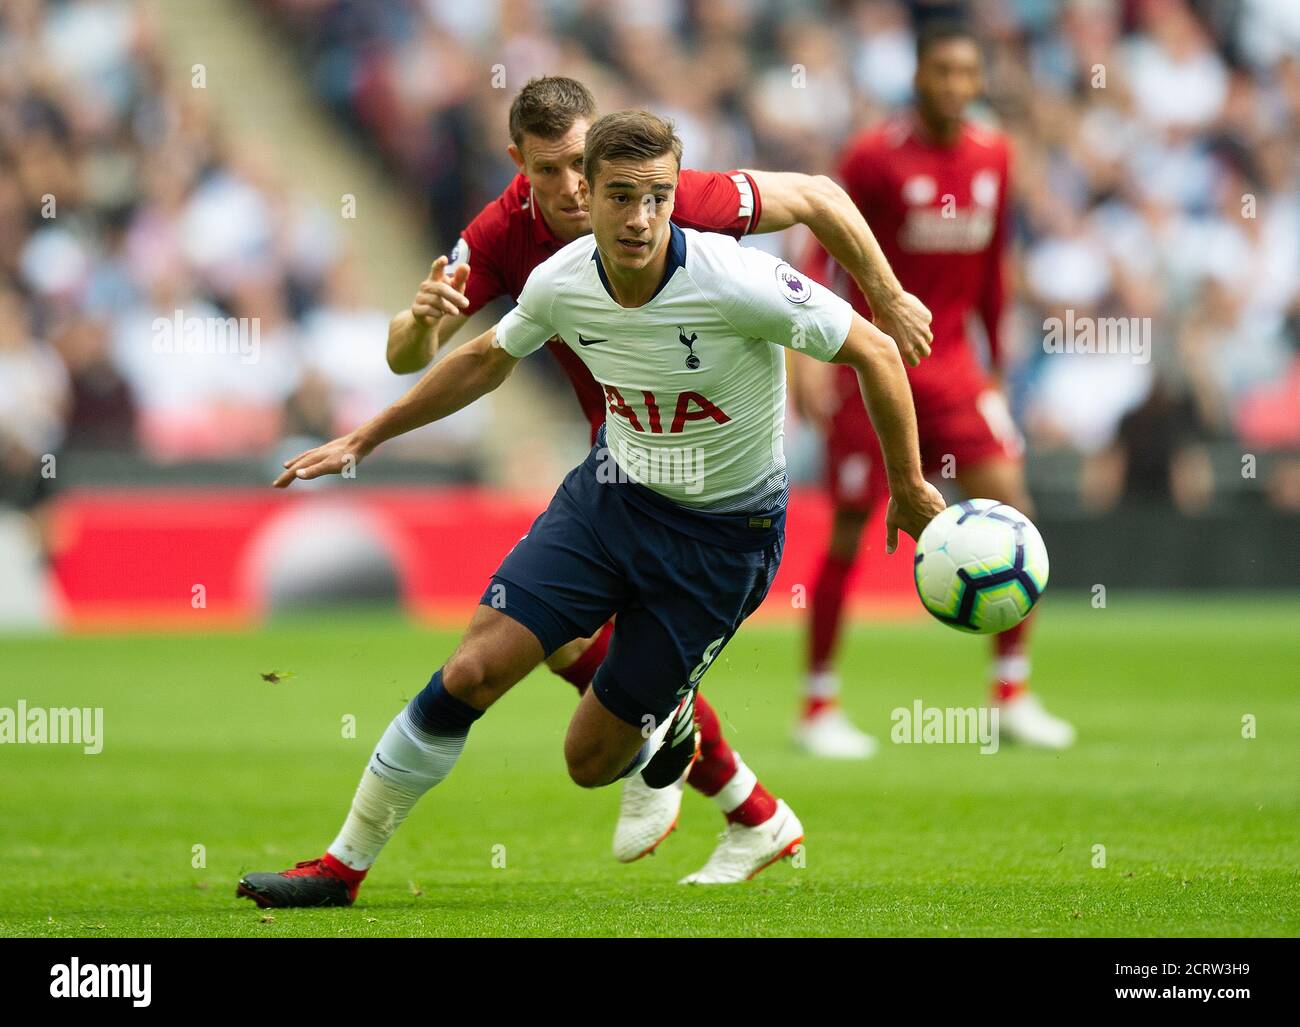 Tottenham Hotspur's Harry Winks.Tottenham Hotspur / Liverpool. Premier League. 15/9/2018 BILDNACHWEIS : © MARK PAIN / ALAMY Stockfoto